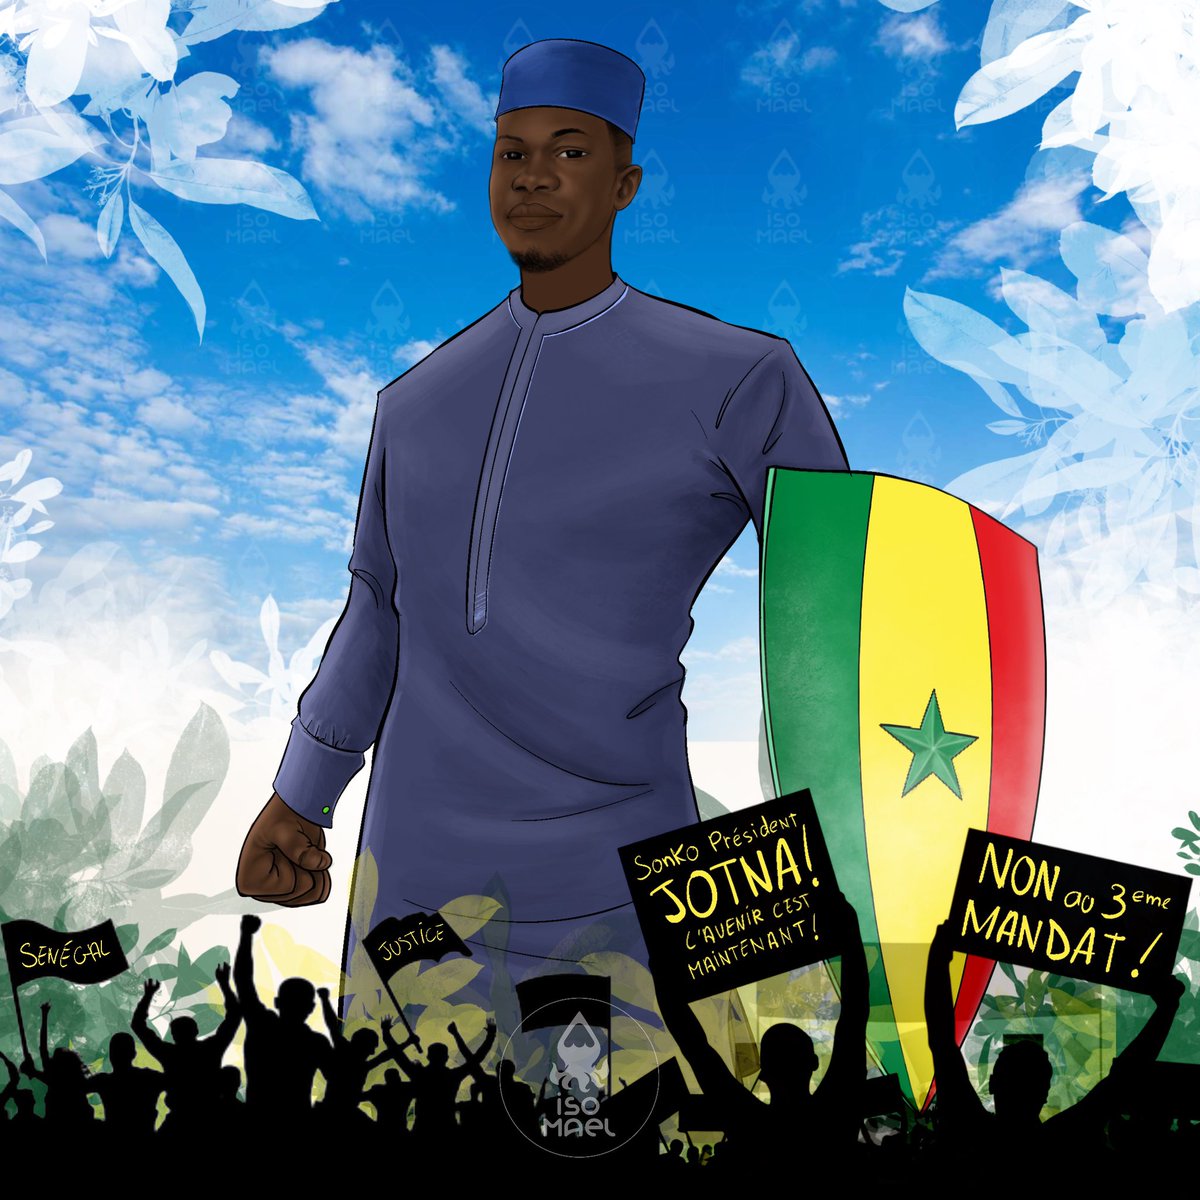 ✊🏾🇸🇳🇸🇳🇸🇳🇸🇳🇸🇳🇸🇳🇸🇳🇸🇳🇸🇳✊🏾

.
#sonko #sonkopresident #sonko2024 #isomael #pastef #senegal #galsencreatives @SonkoOfficiel #sonko2024